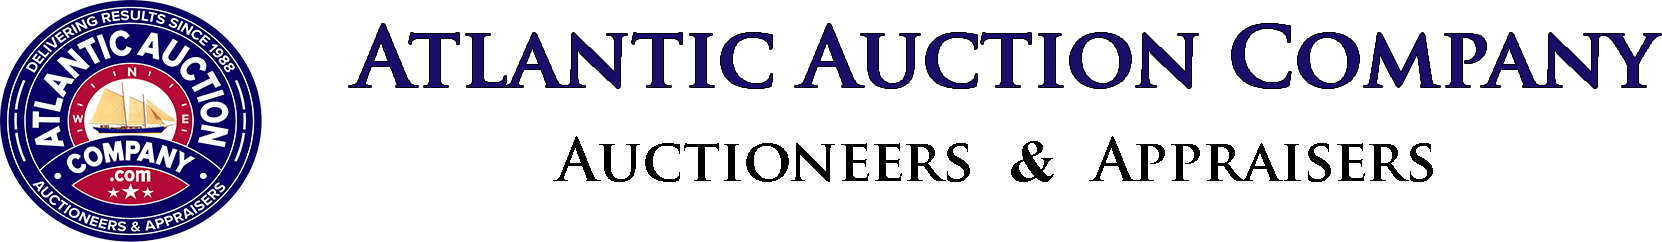 Atlantic Auction Company